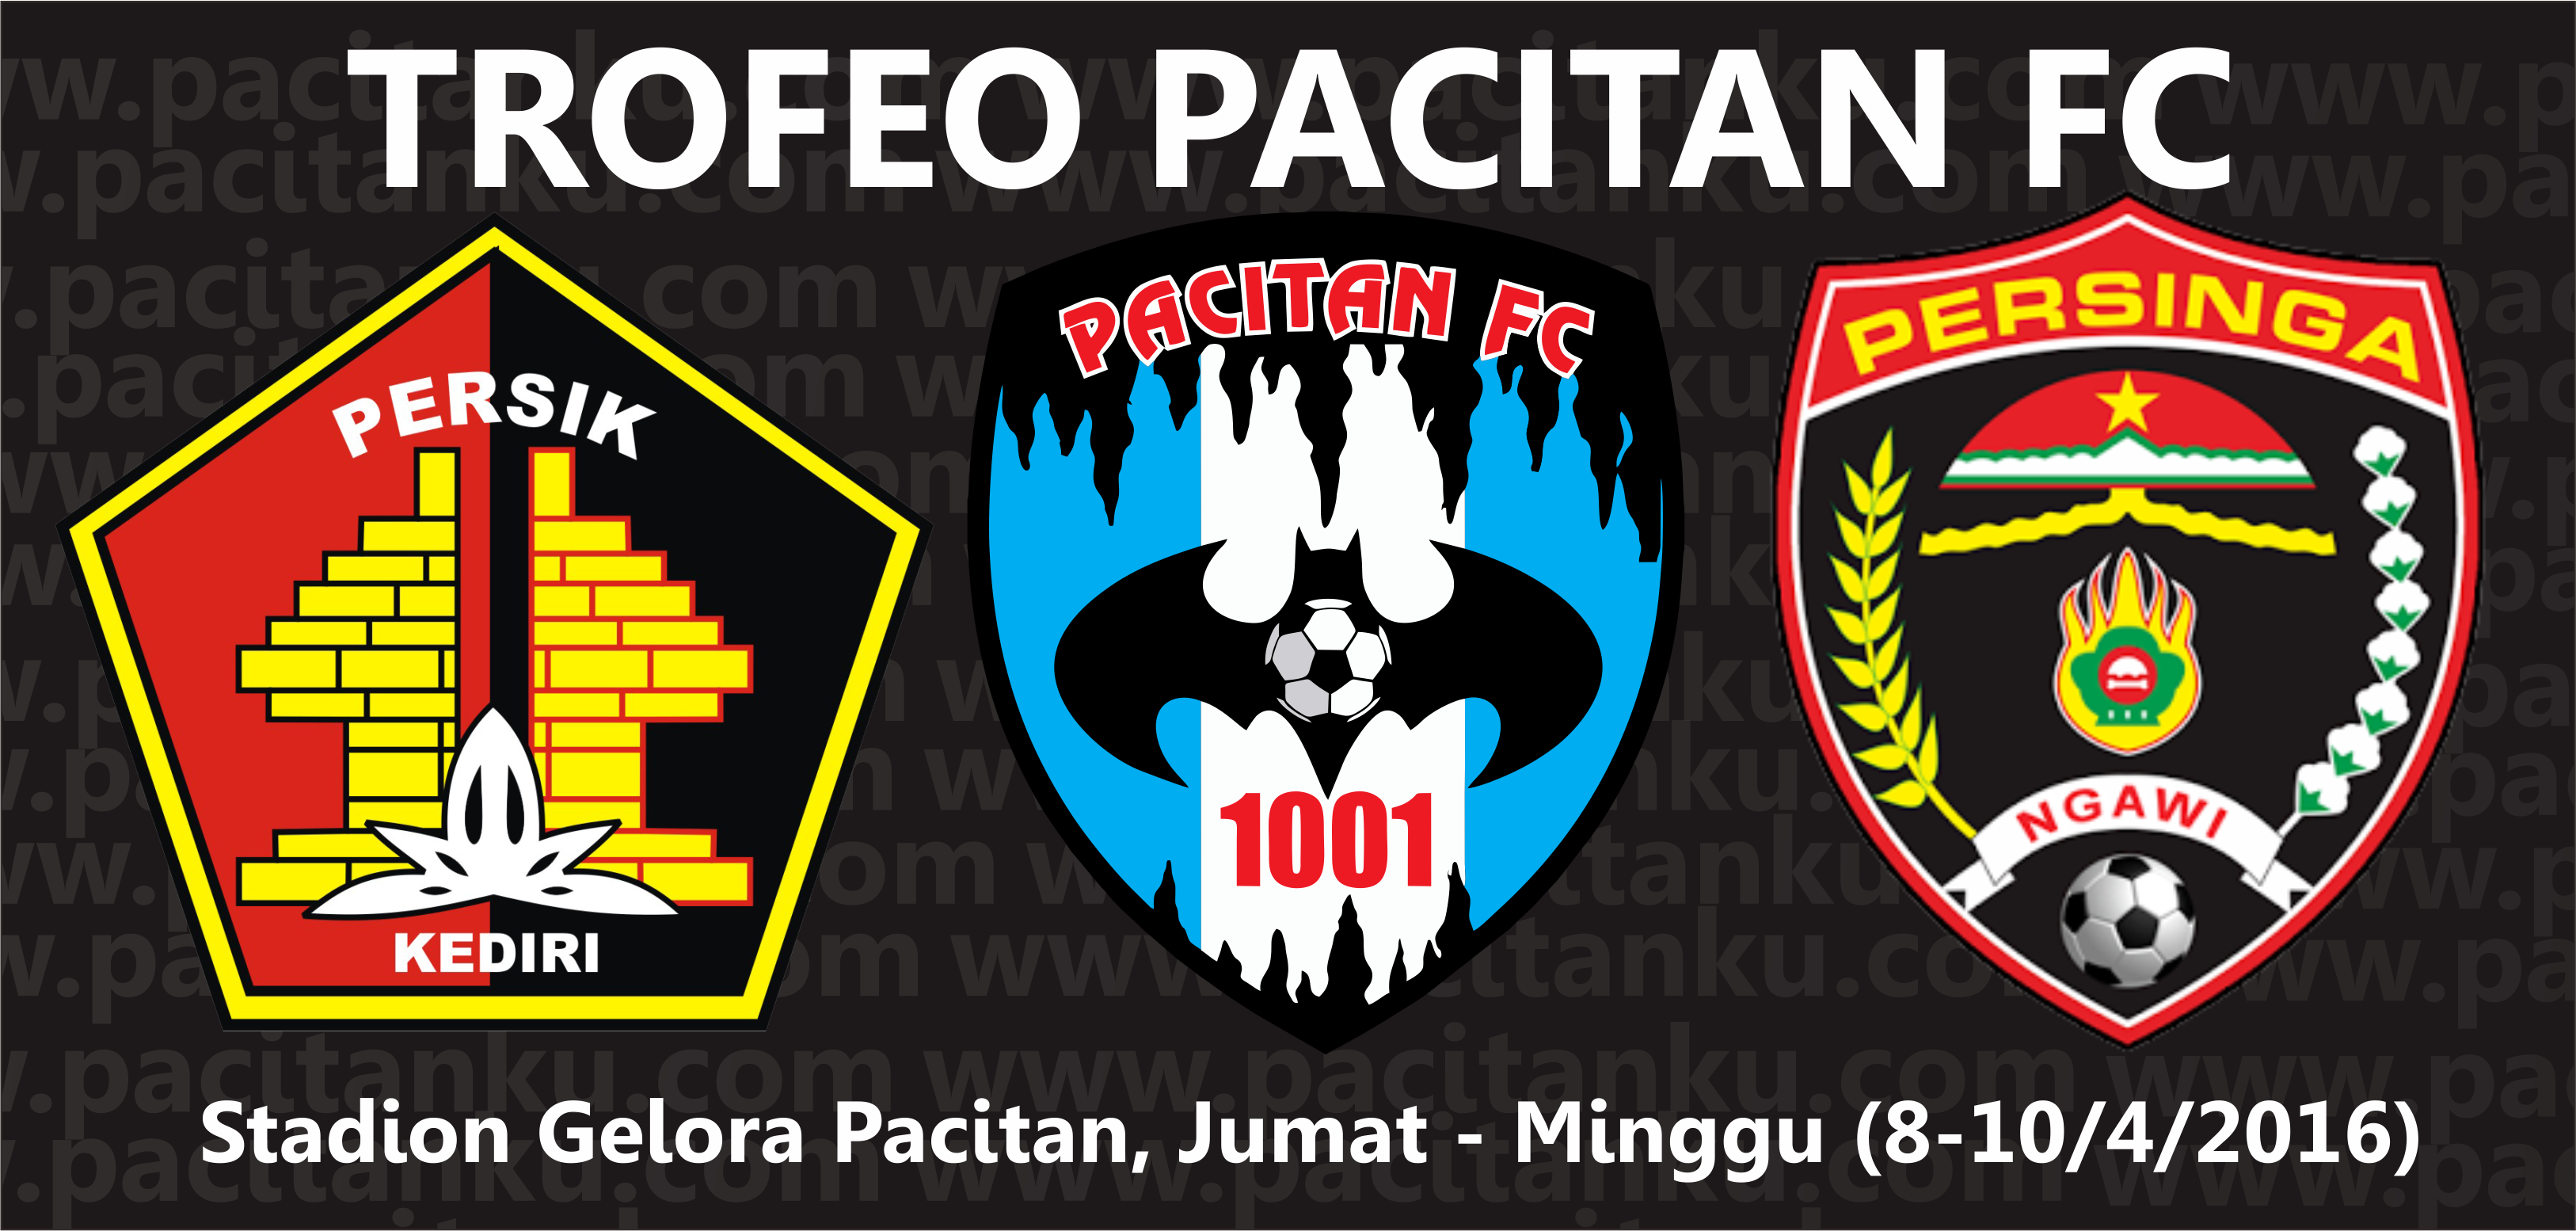 Trofeo Pacitan FC 2016